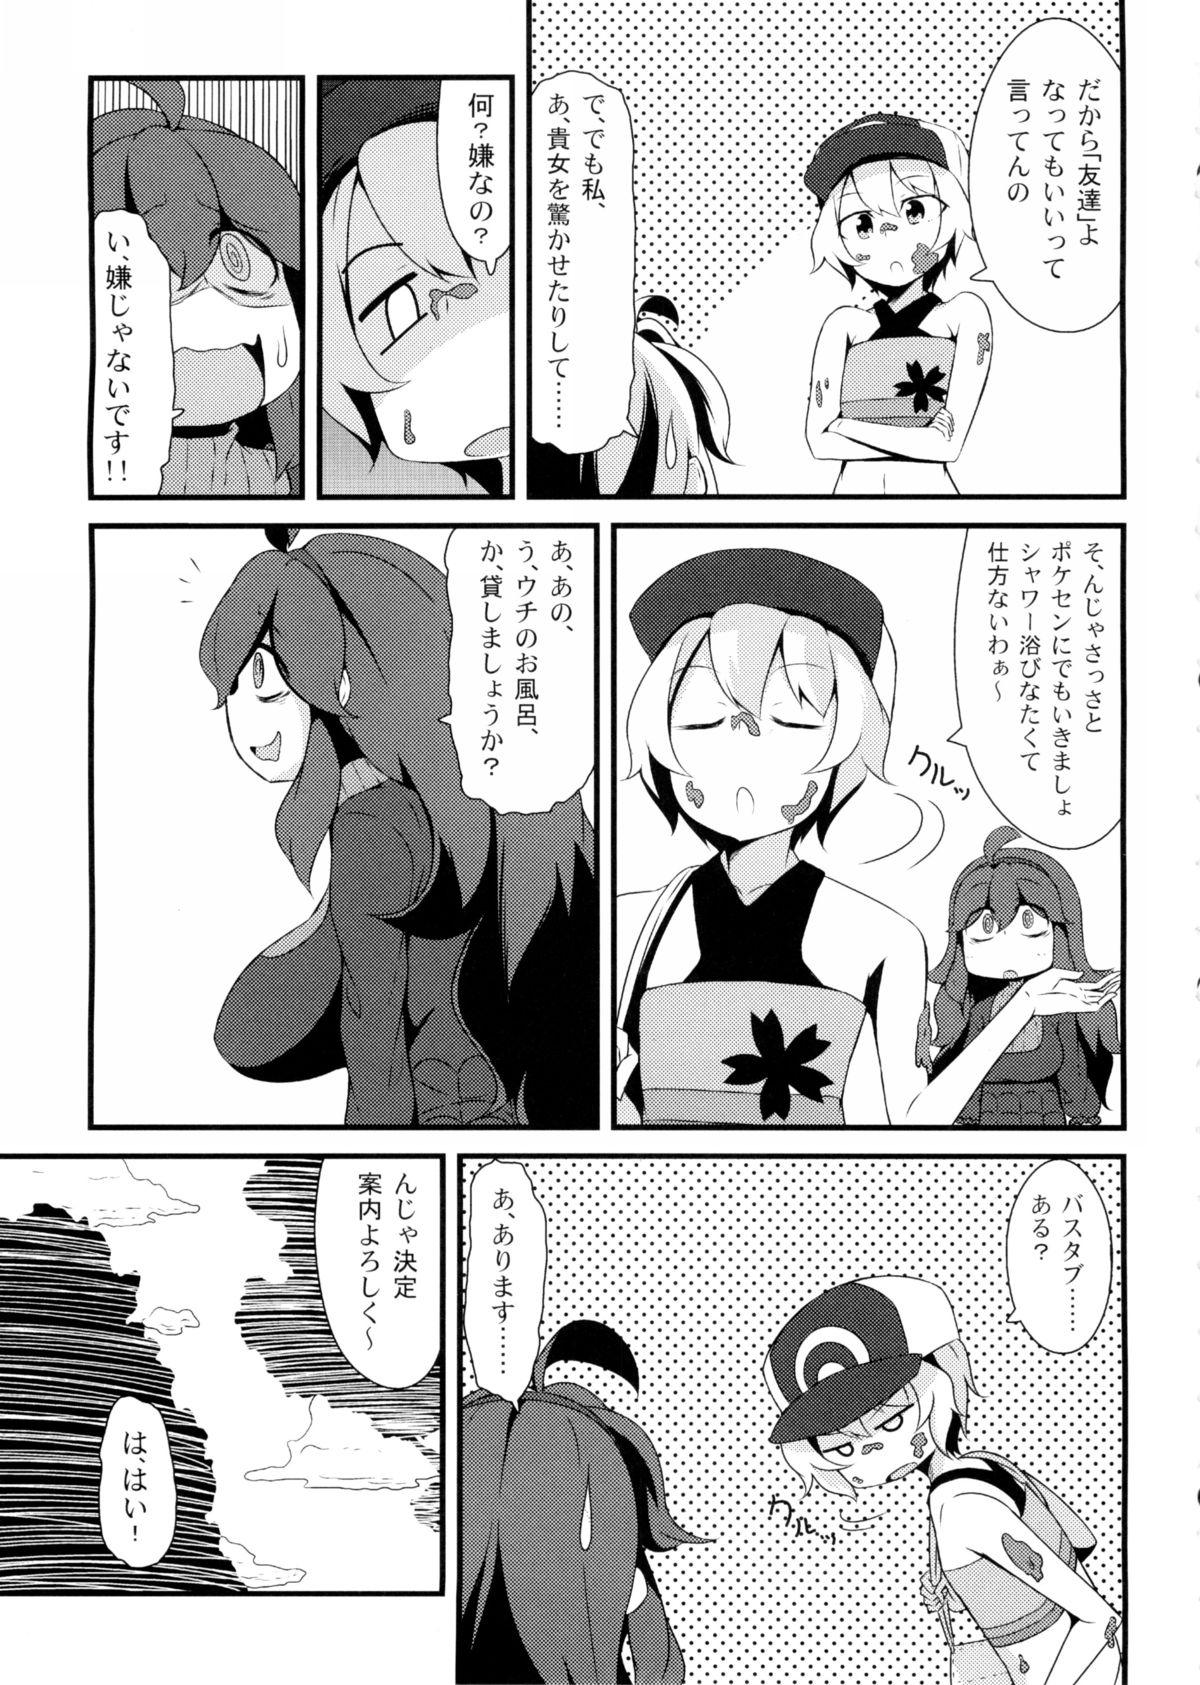 Penetration Tomodachi? Maniac - Pokemon Corno - Page 4